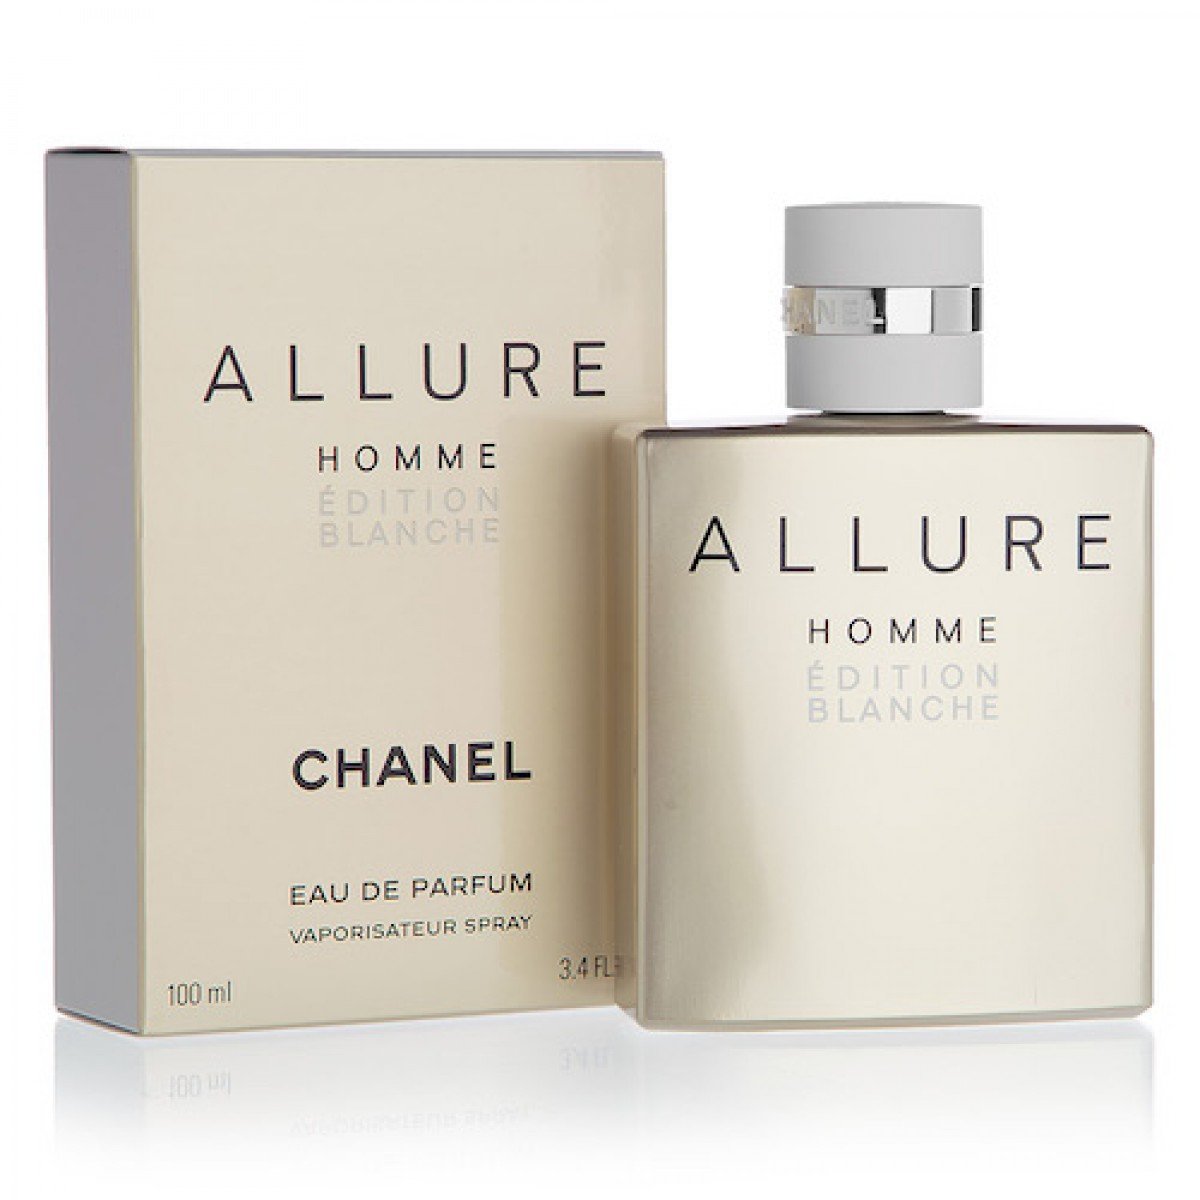 Allure homme мужской. Chanel Allure homme Edition Blanche 100ml. Chanel Allure homme Edition Edition. Chanel Allure homme 100 ml. Chanel Allure homme Edition Blanche Eau de Parfum.